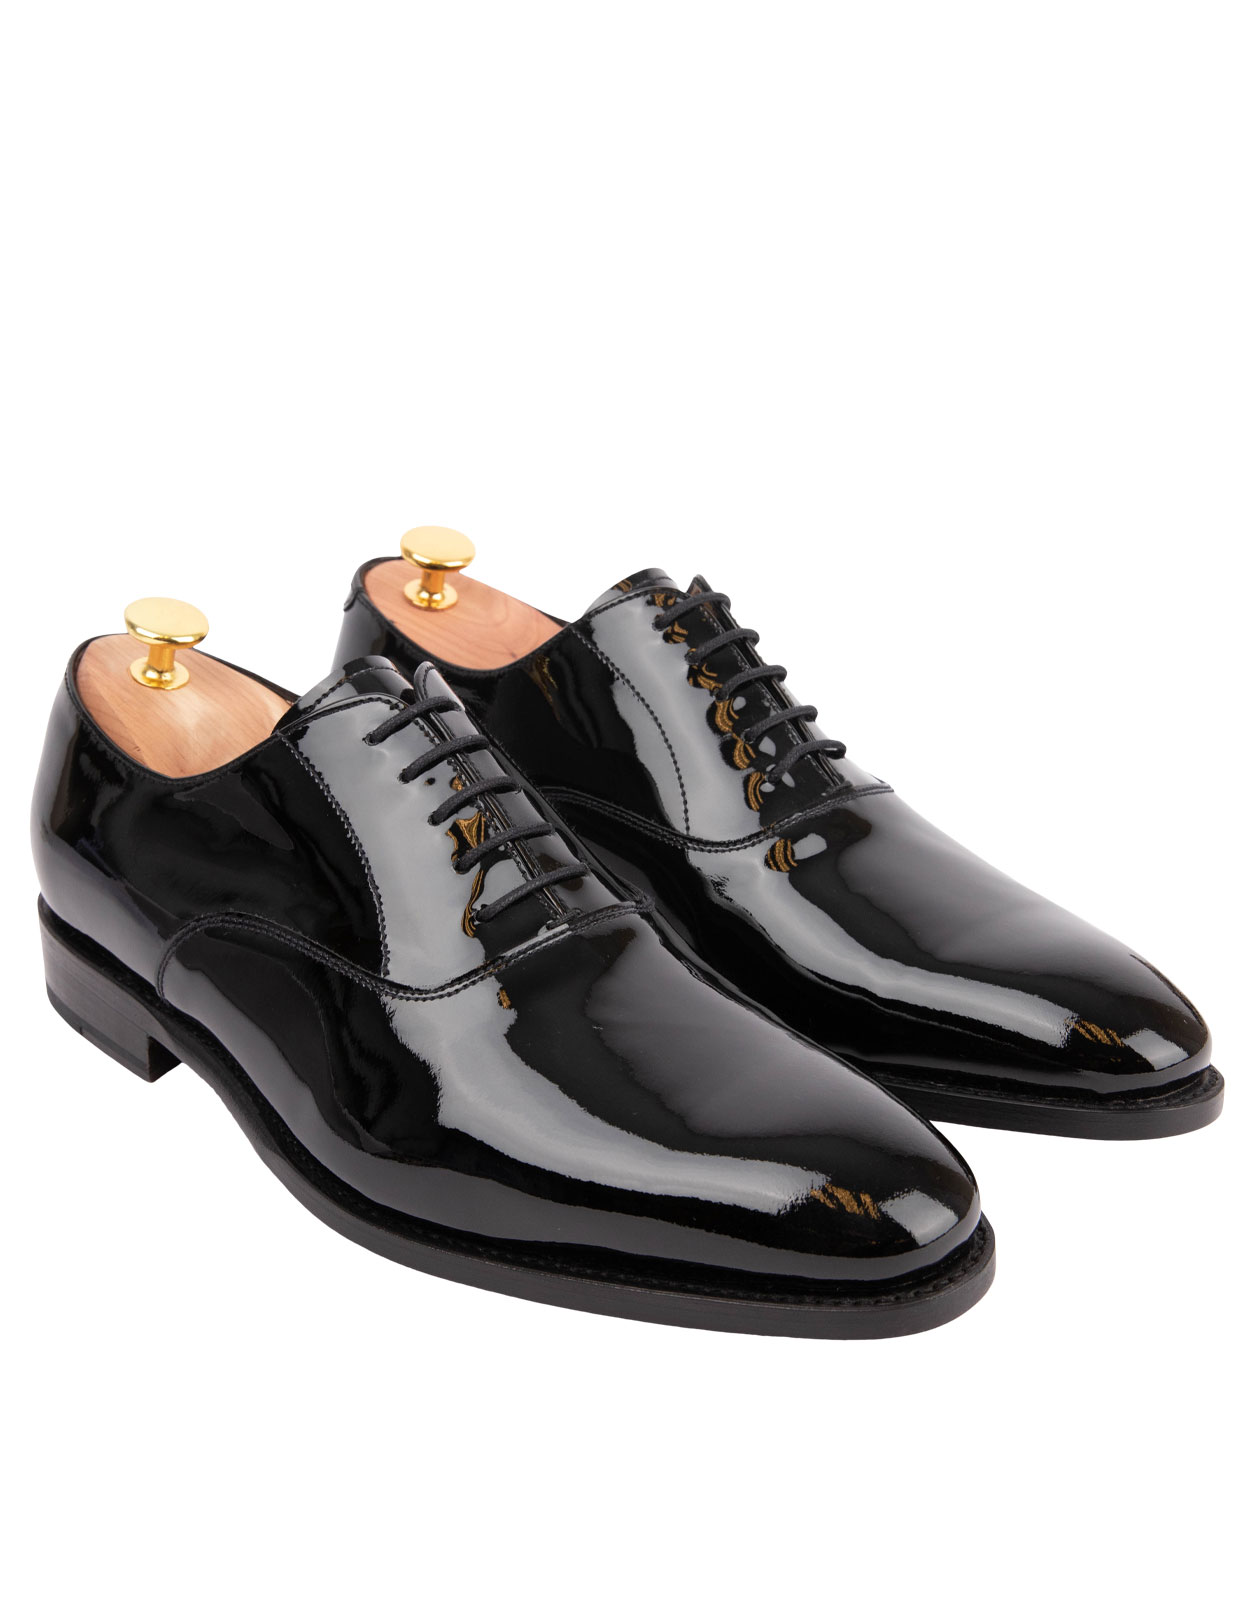 Patent Leather Oxford Shoe Black Stl 11